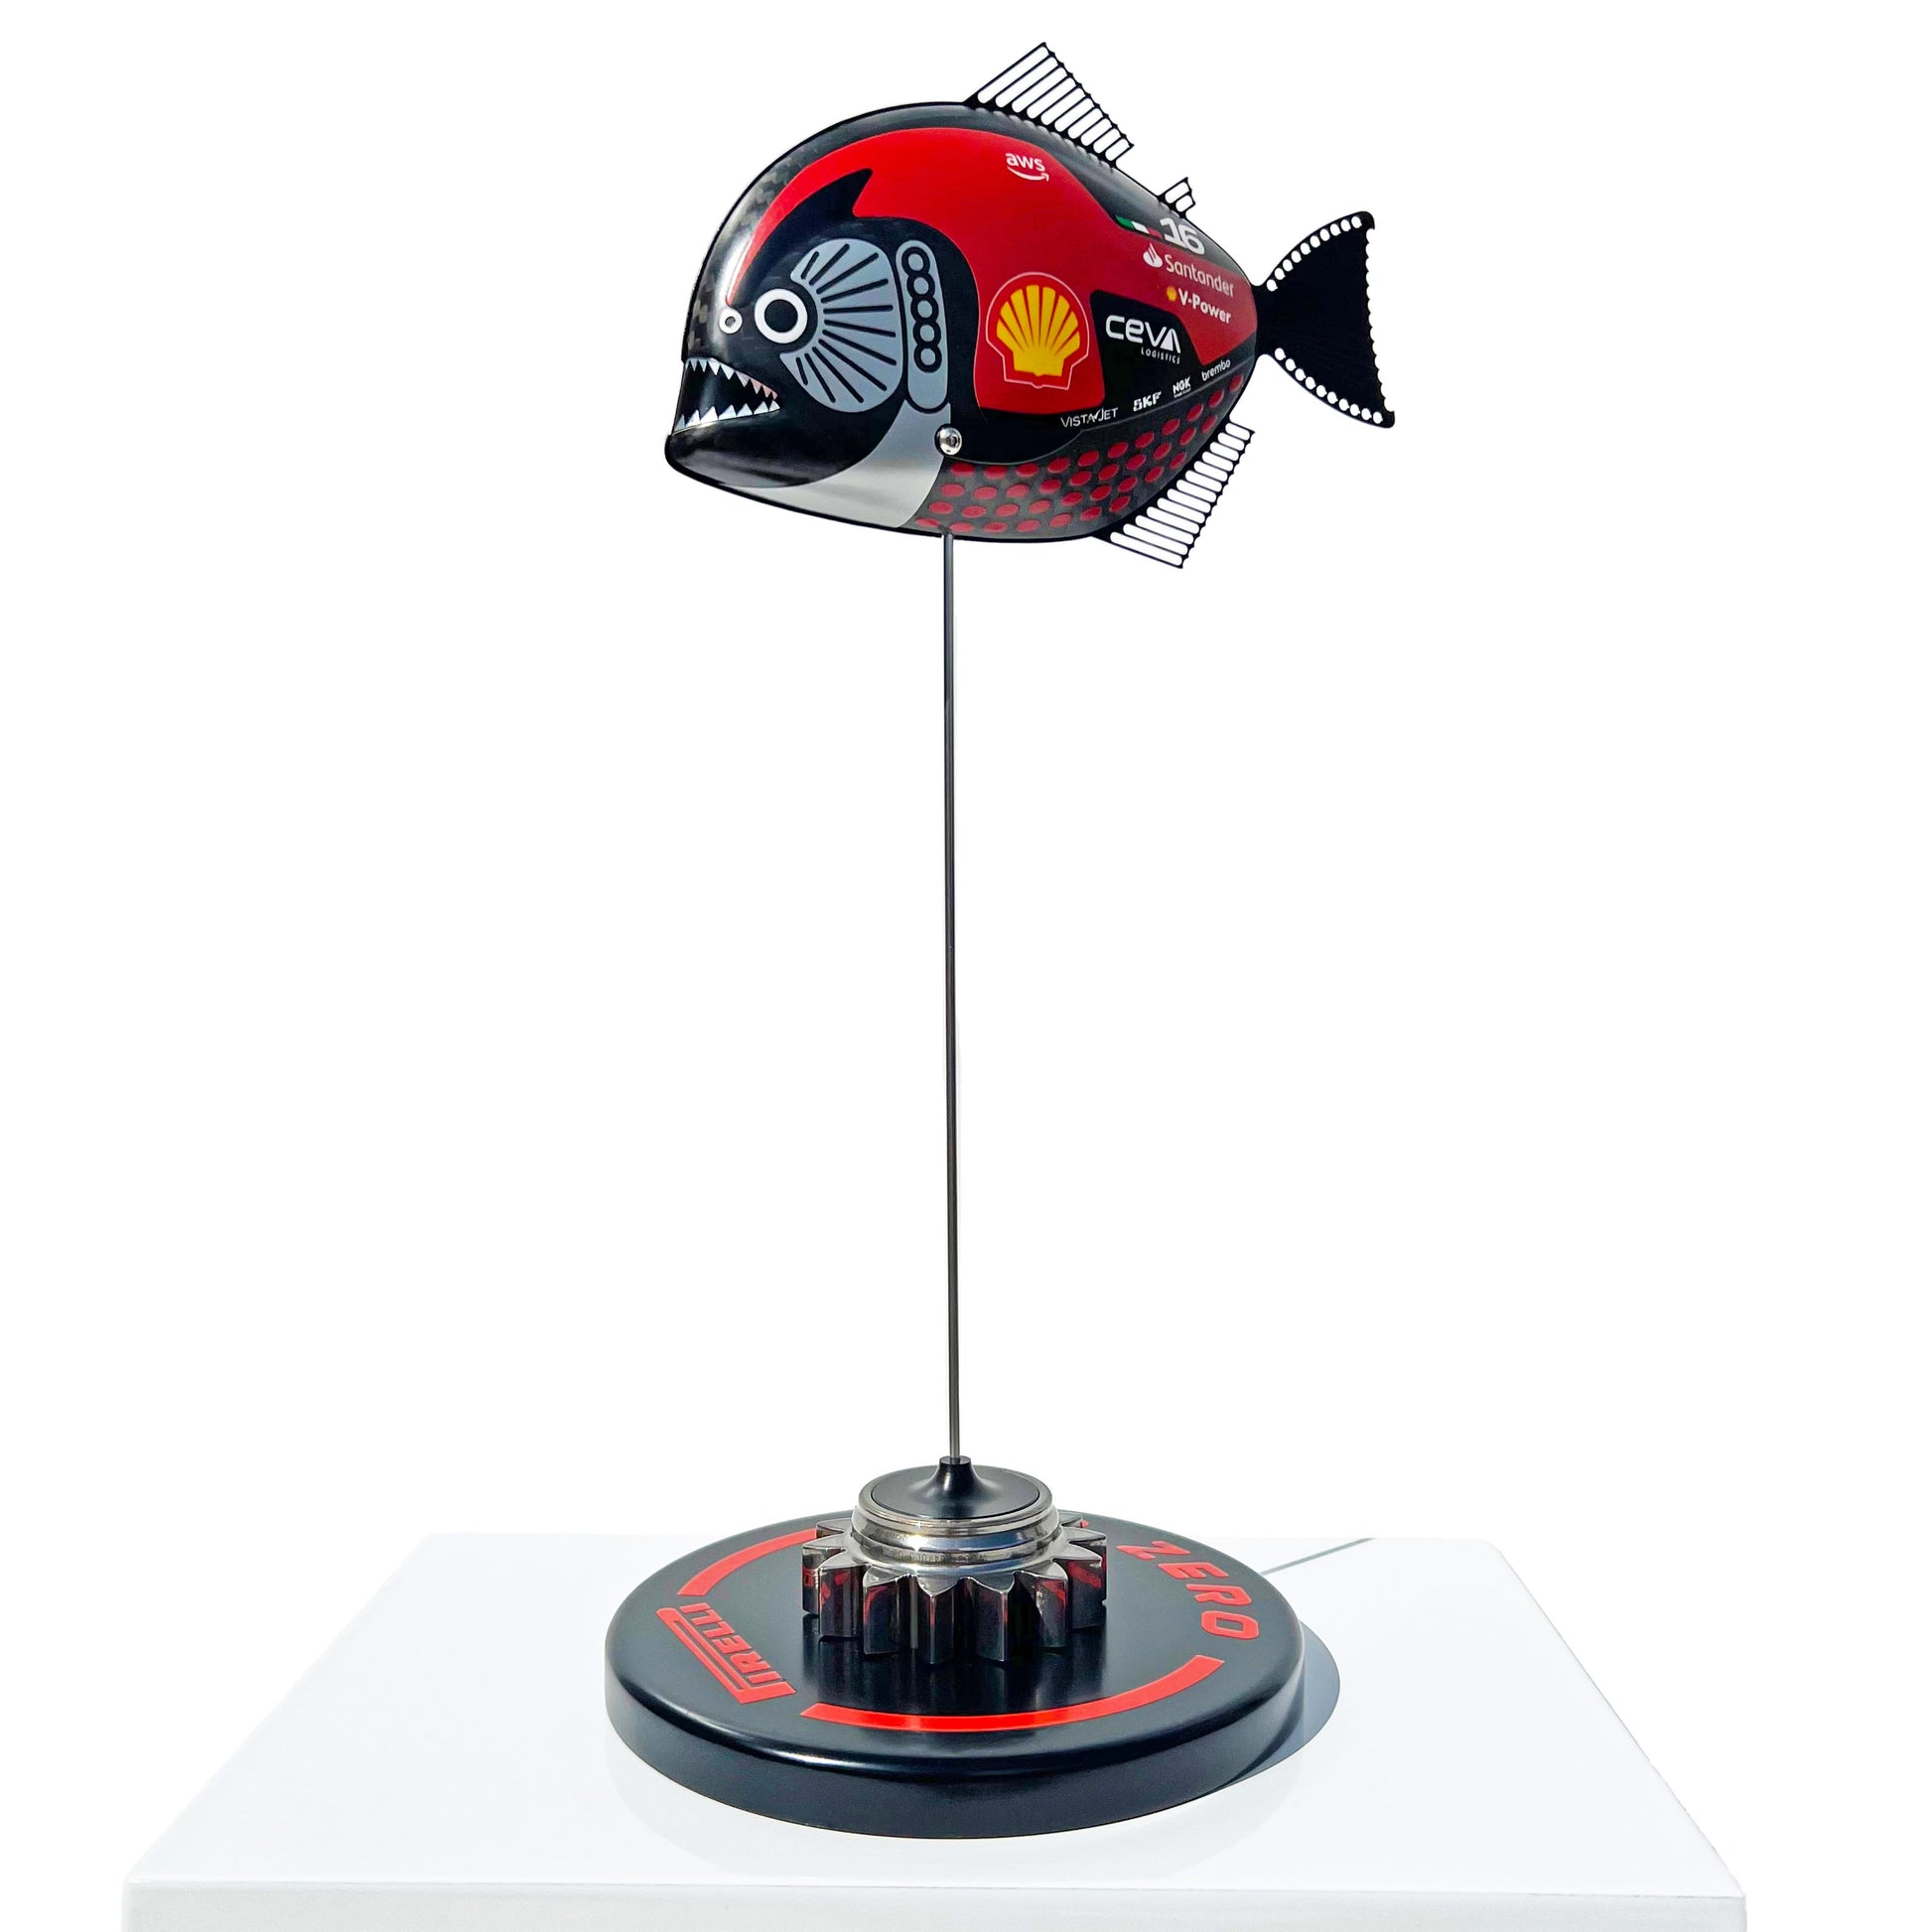 Carbon Fibre Piranha sculpture with 2023 Ferrari Formula One inspired Livery.